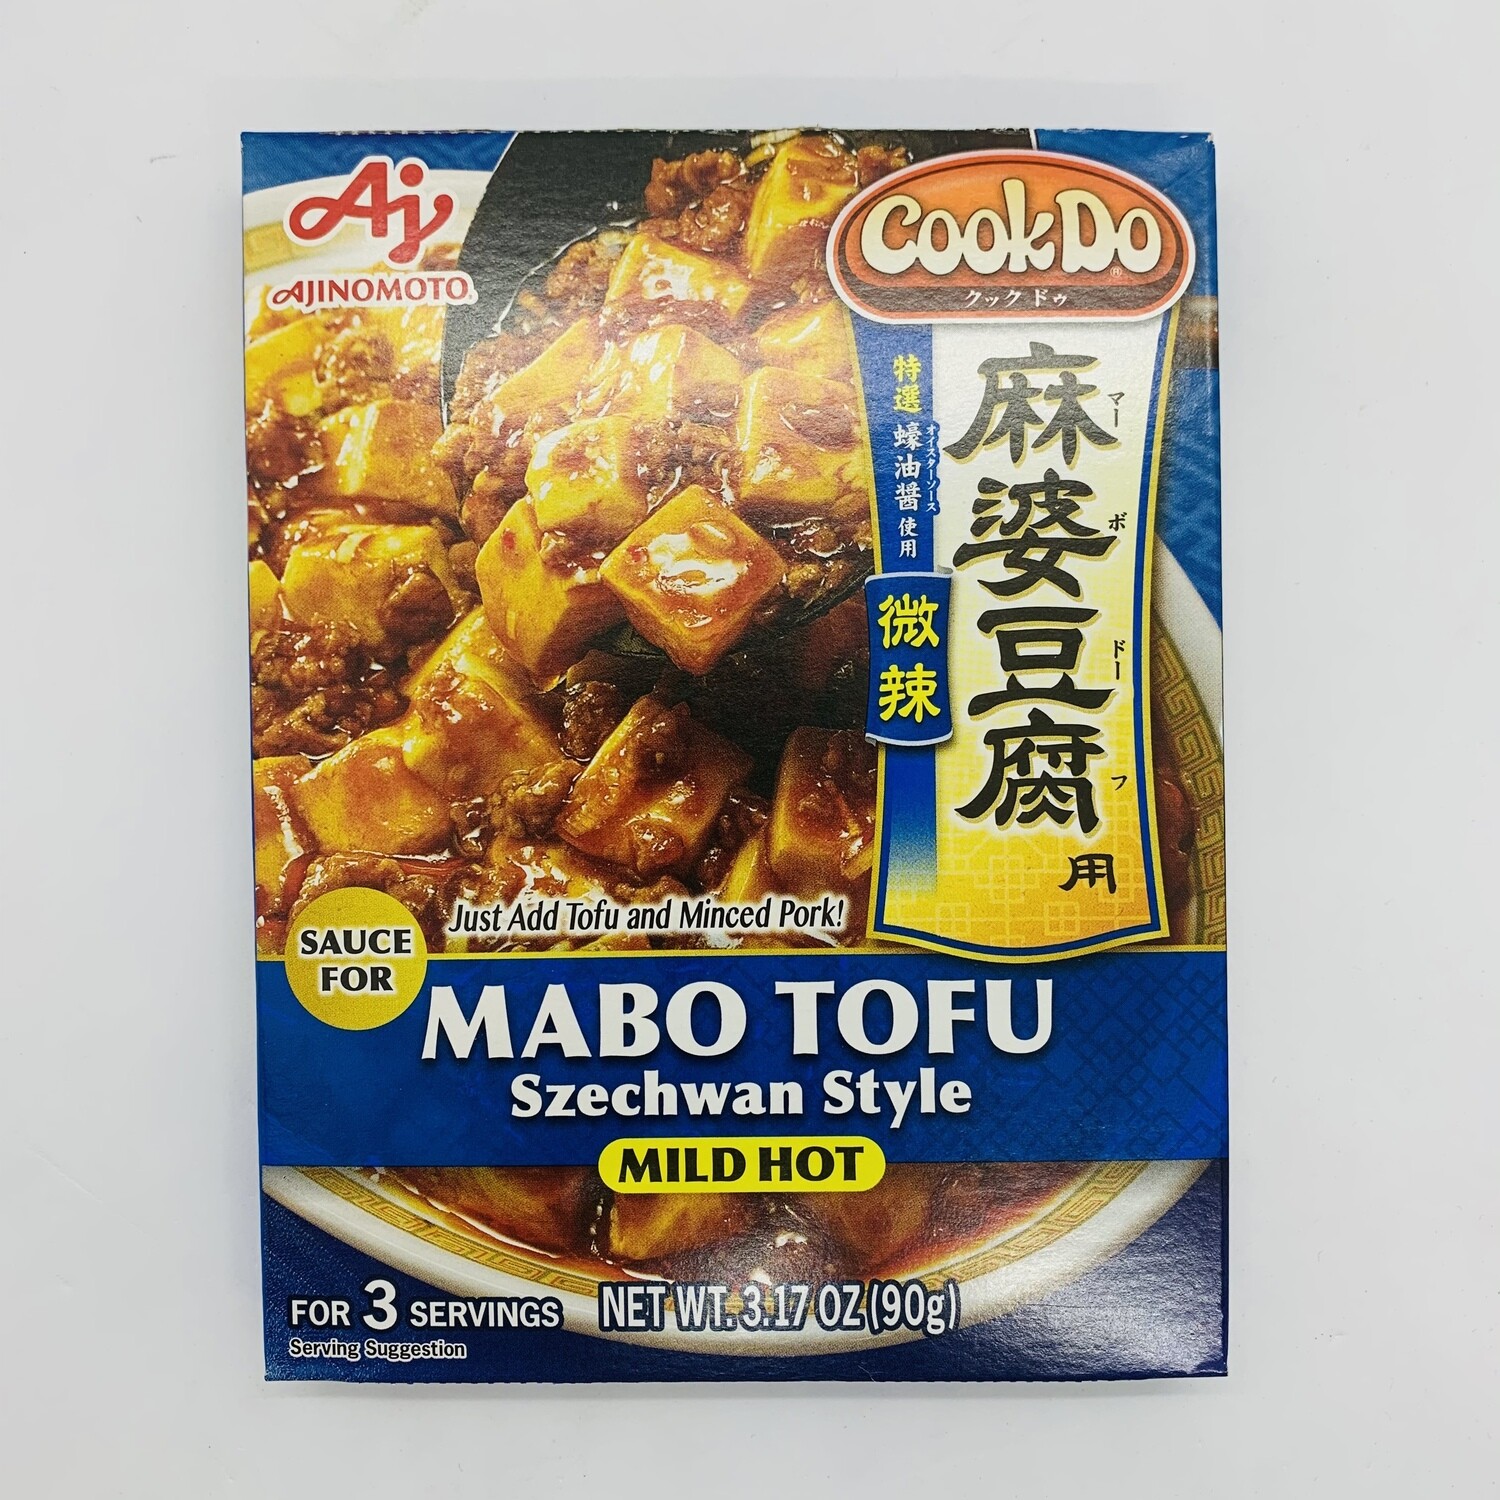 Ajinomoto Cookdo Mabo Tofu Mild